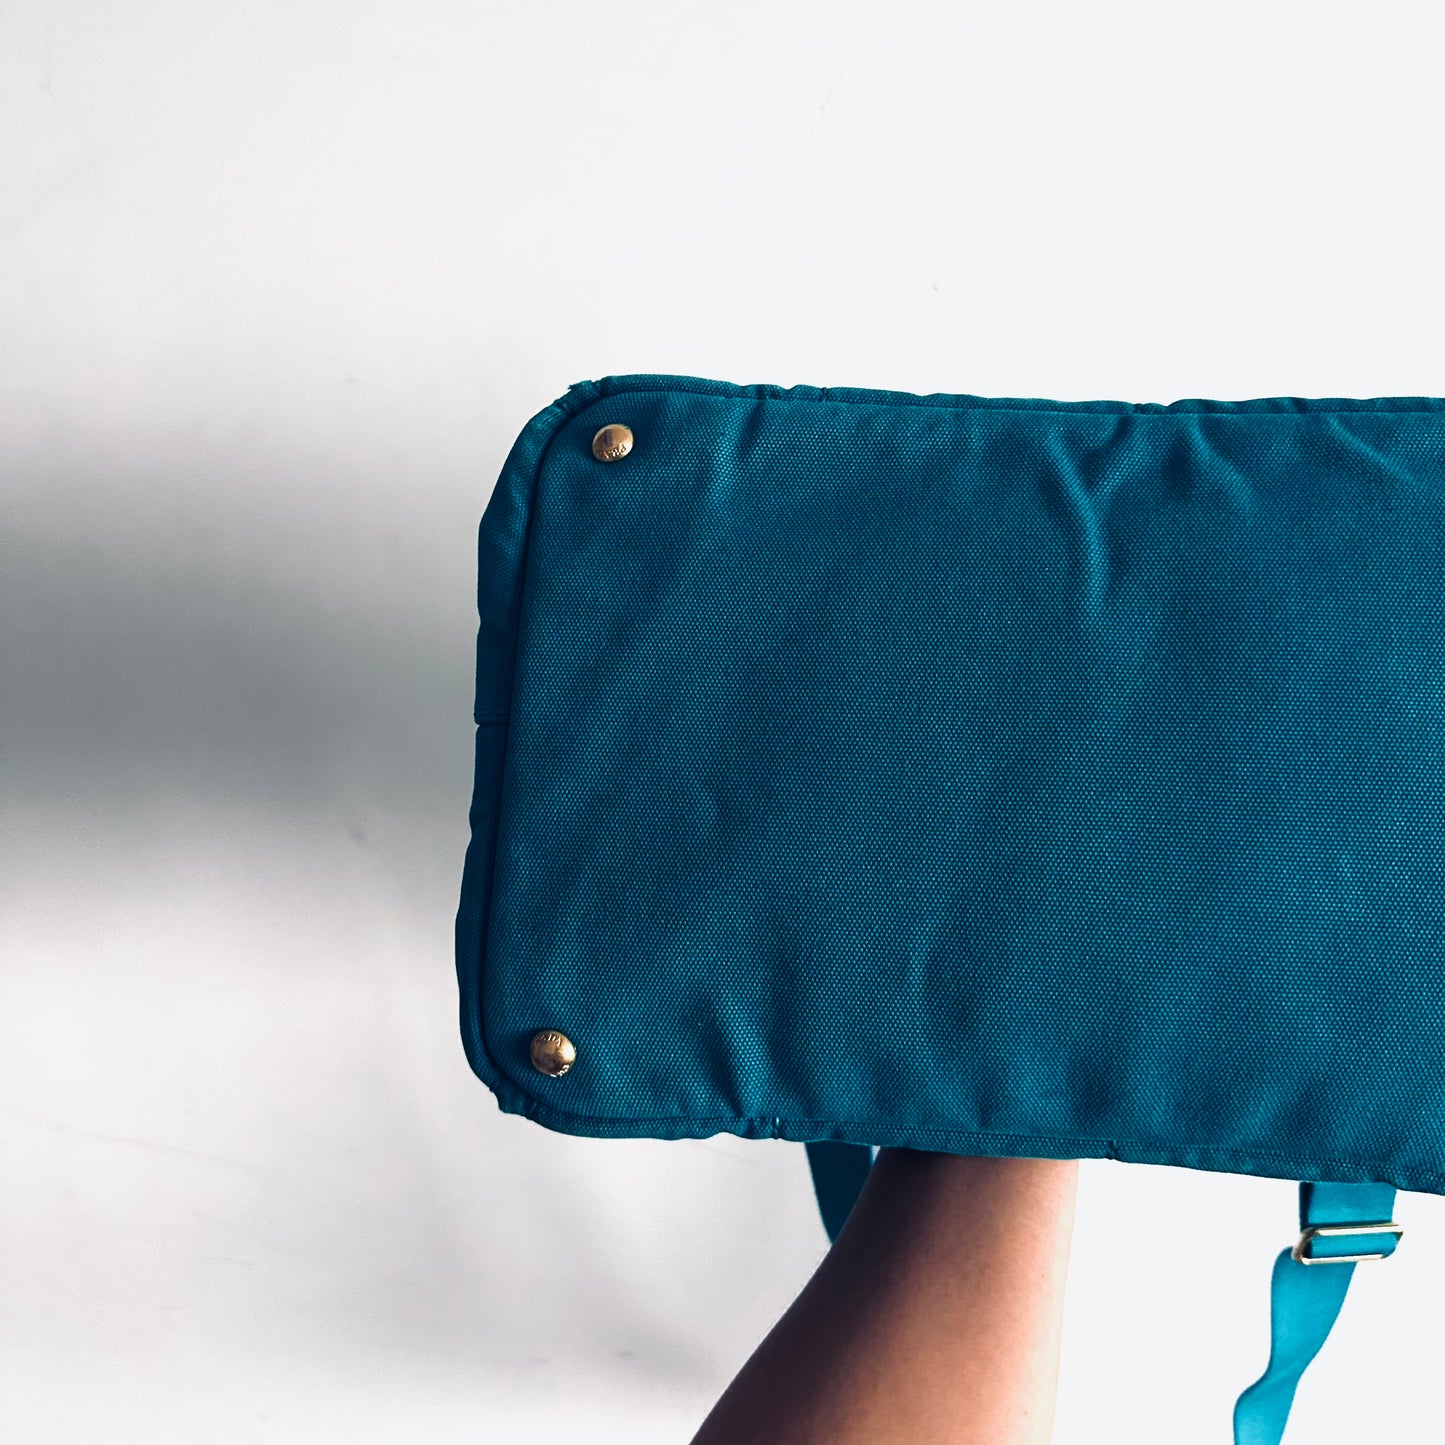 Prada Canapa Teal Blue GHW Classic Logo 2-Way Structured Shopper Shoulder Sling Tote Bag